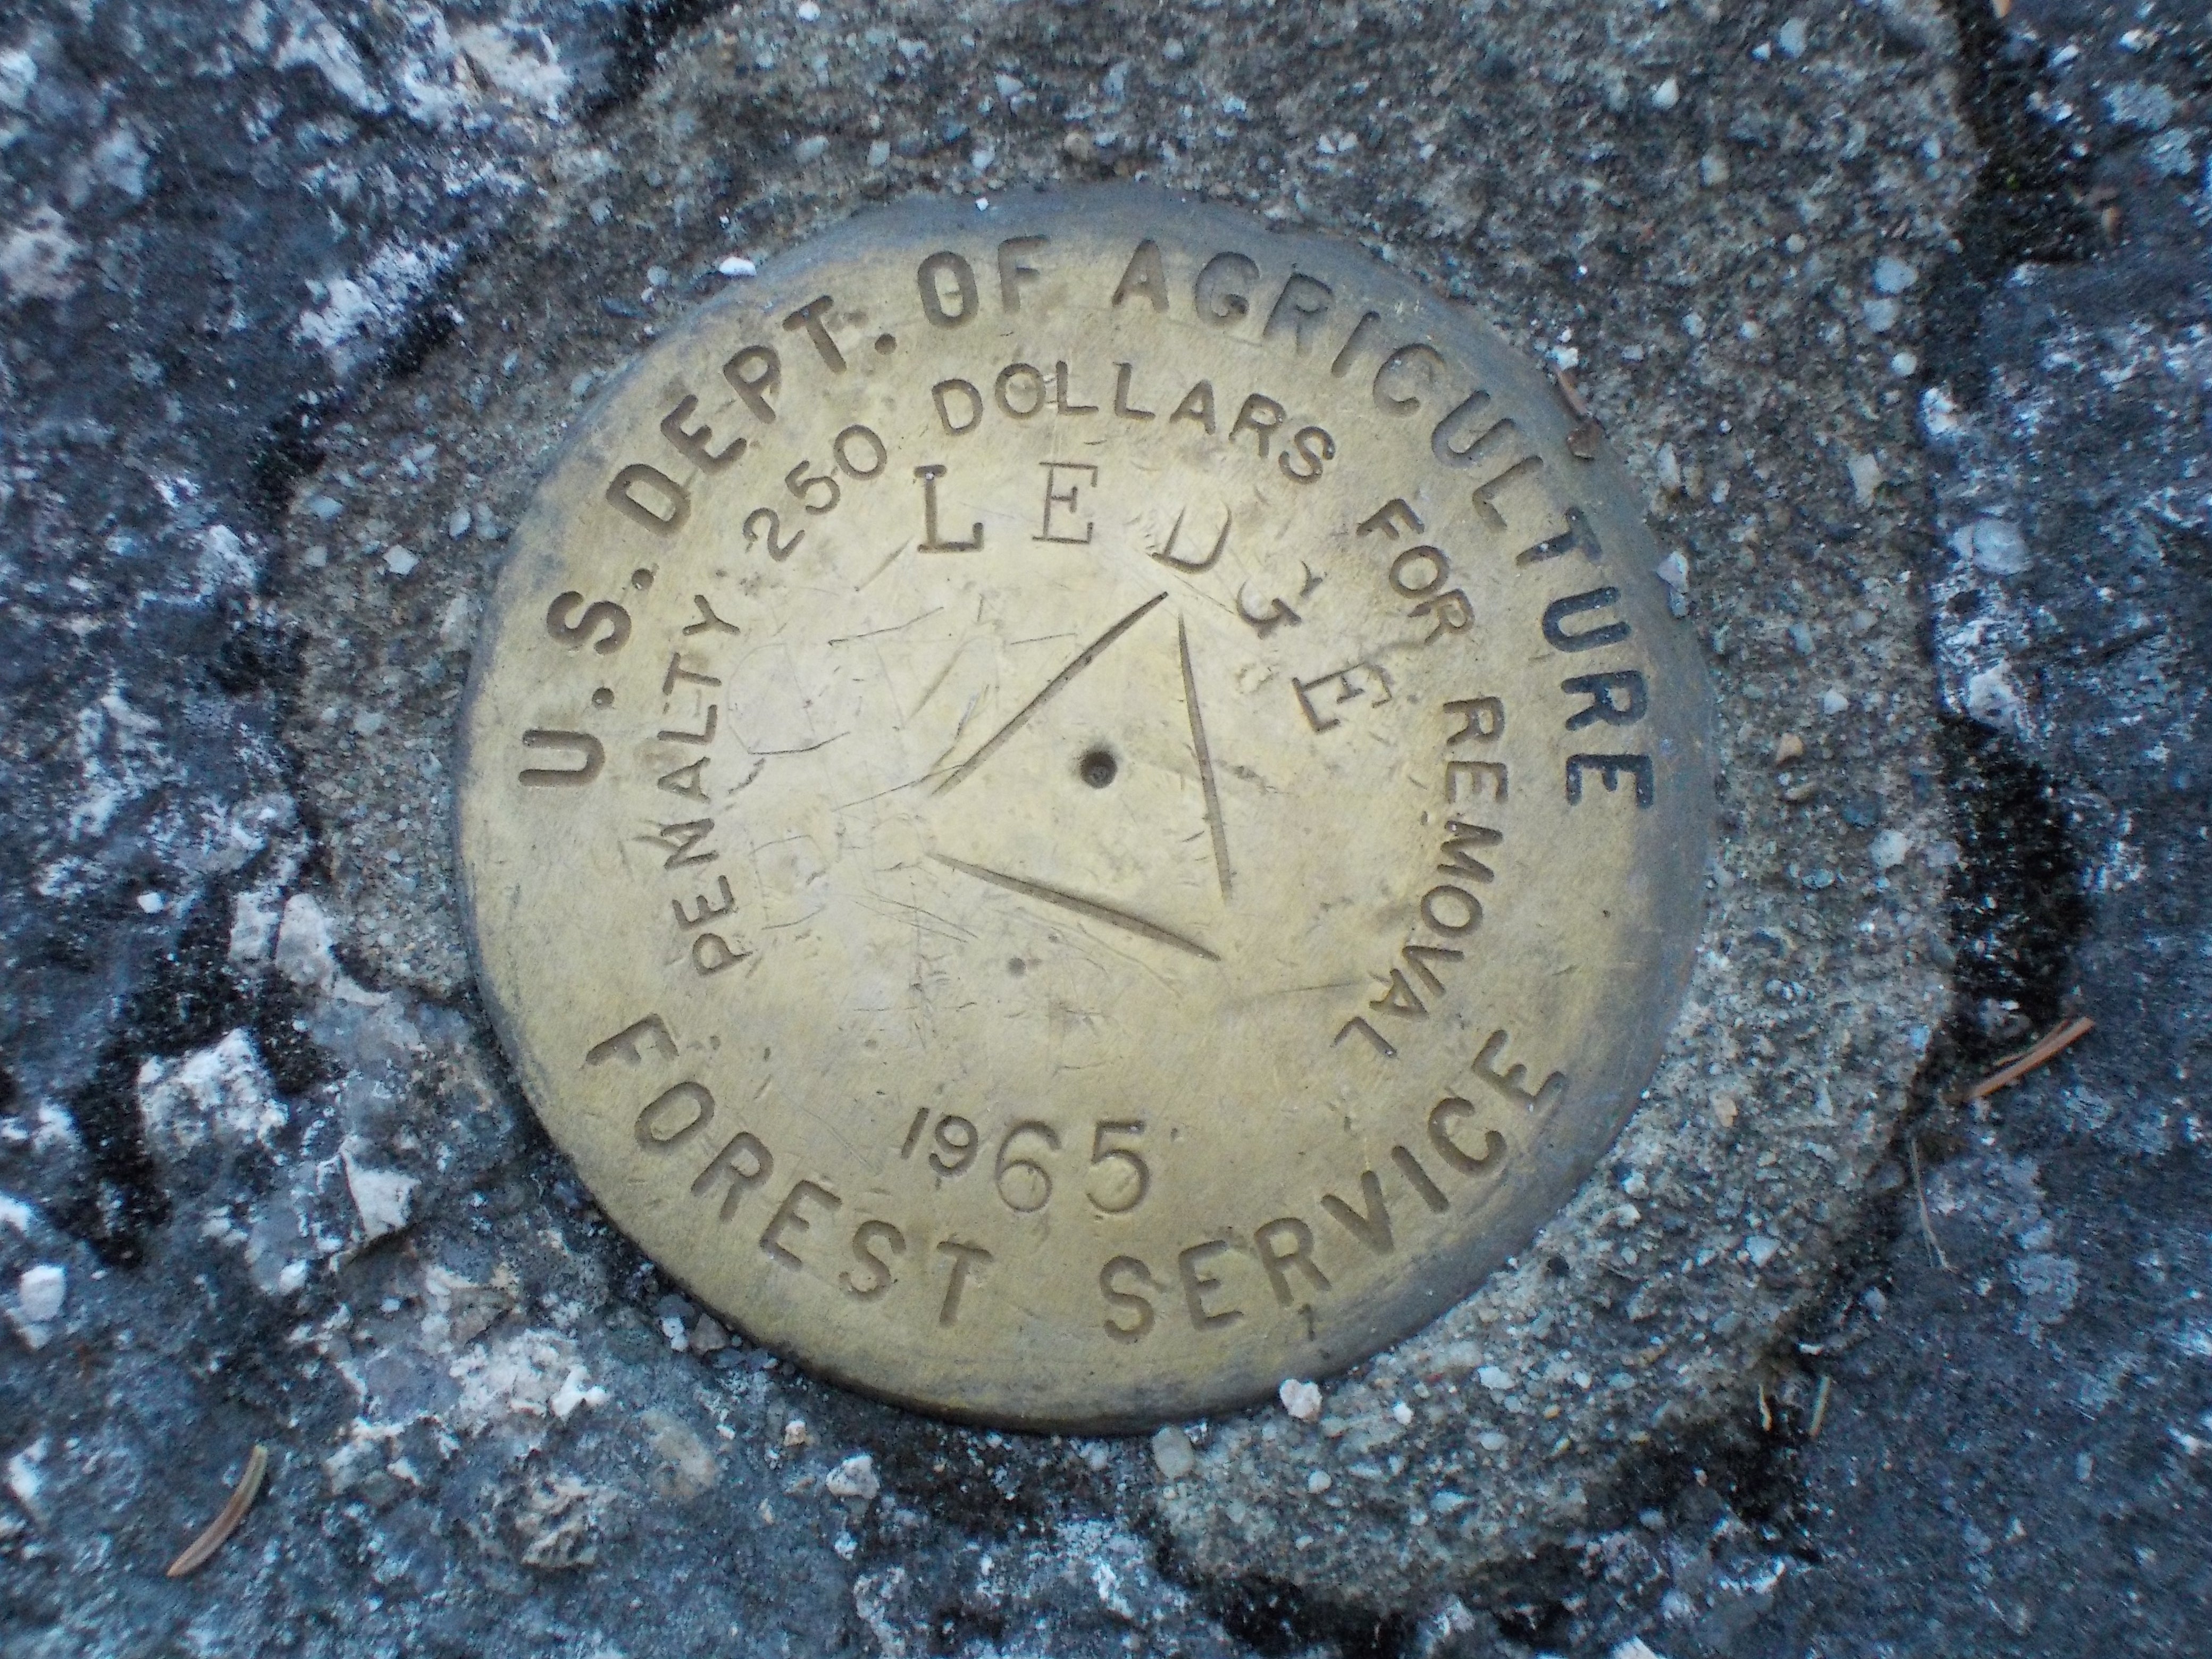 USGS Marker on Rogers Ledge